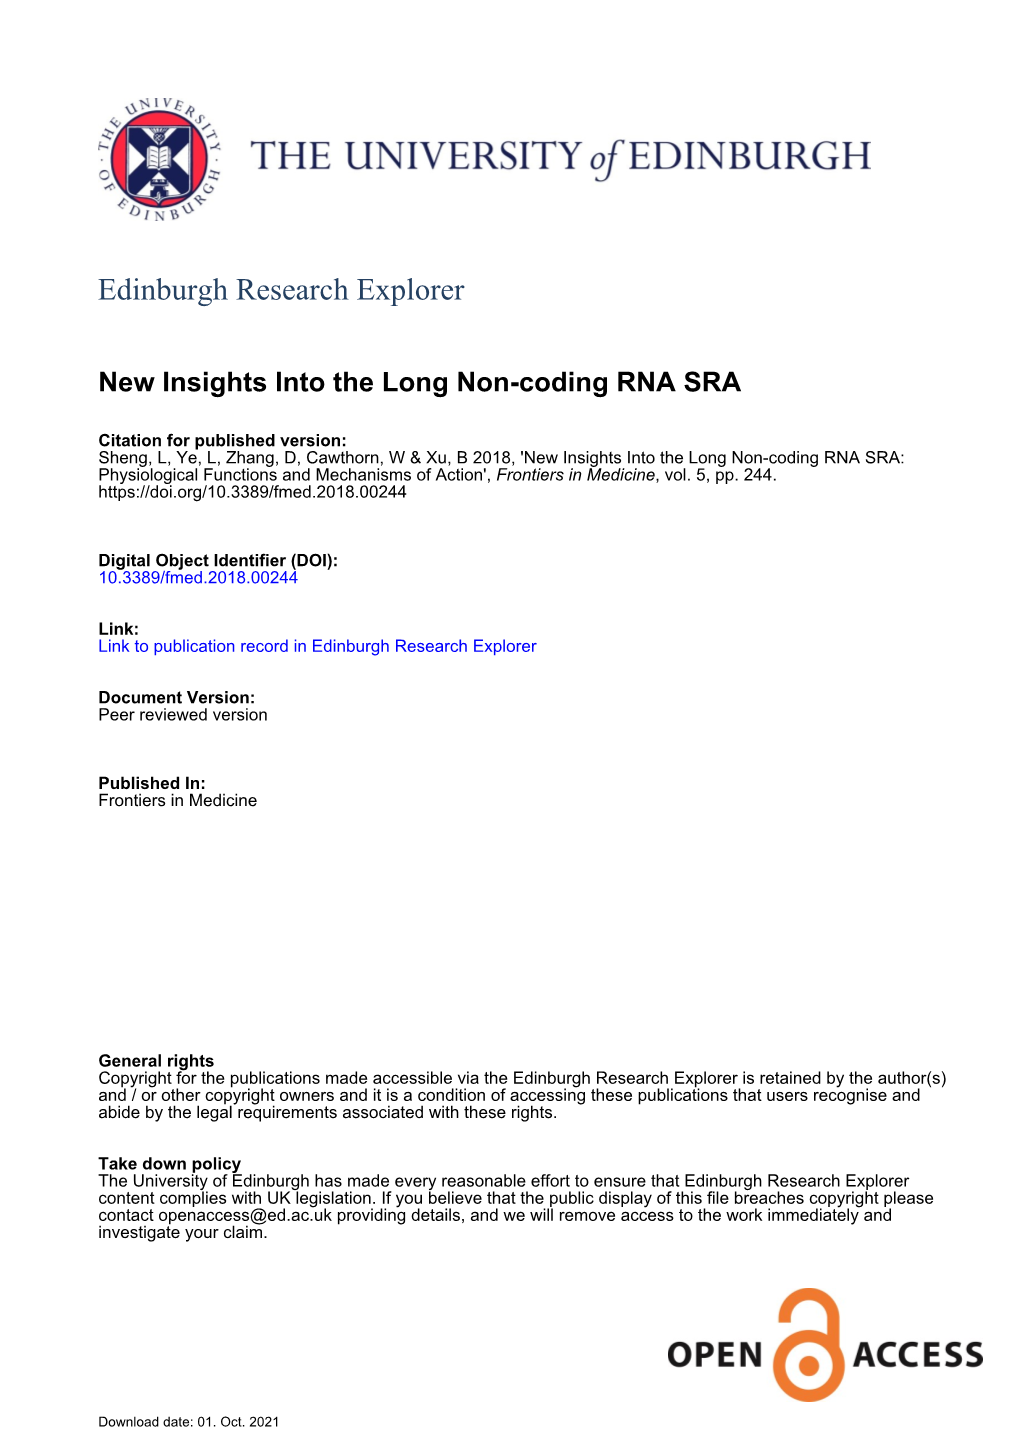 New Insights Into the Long Non-Coding RNA SRA